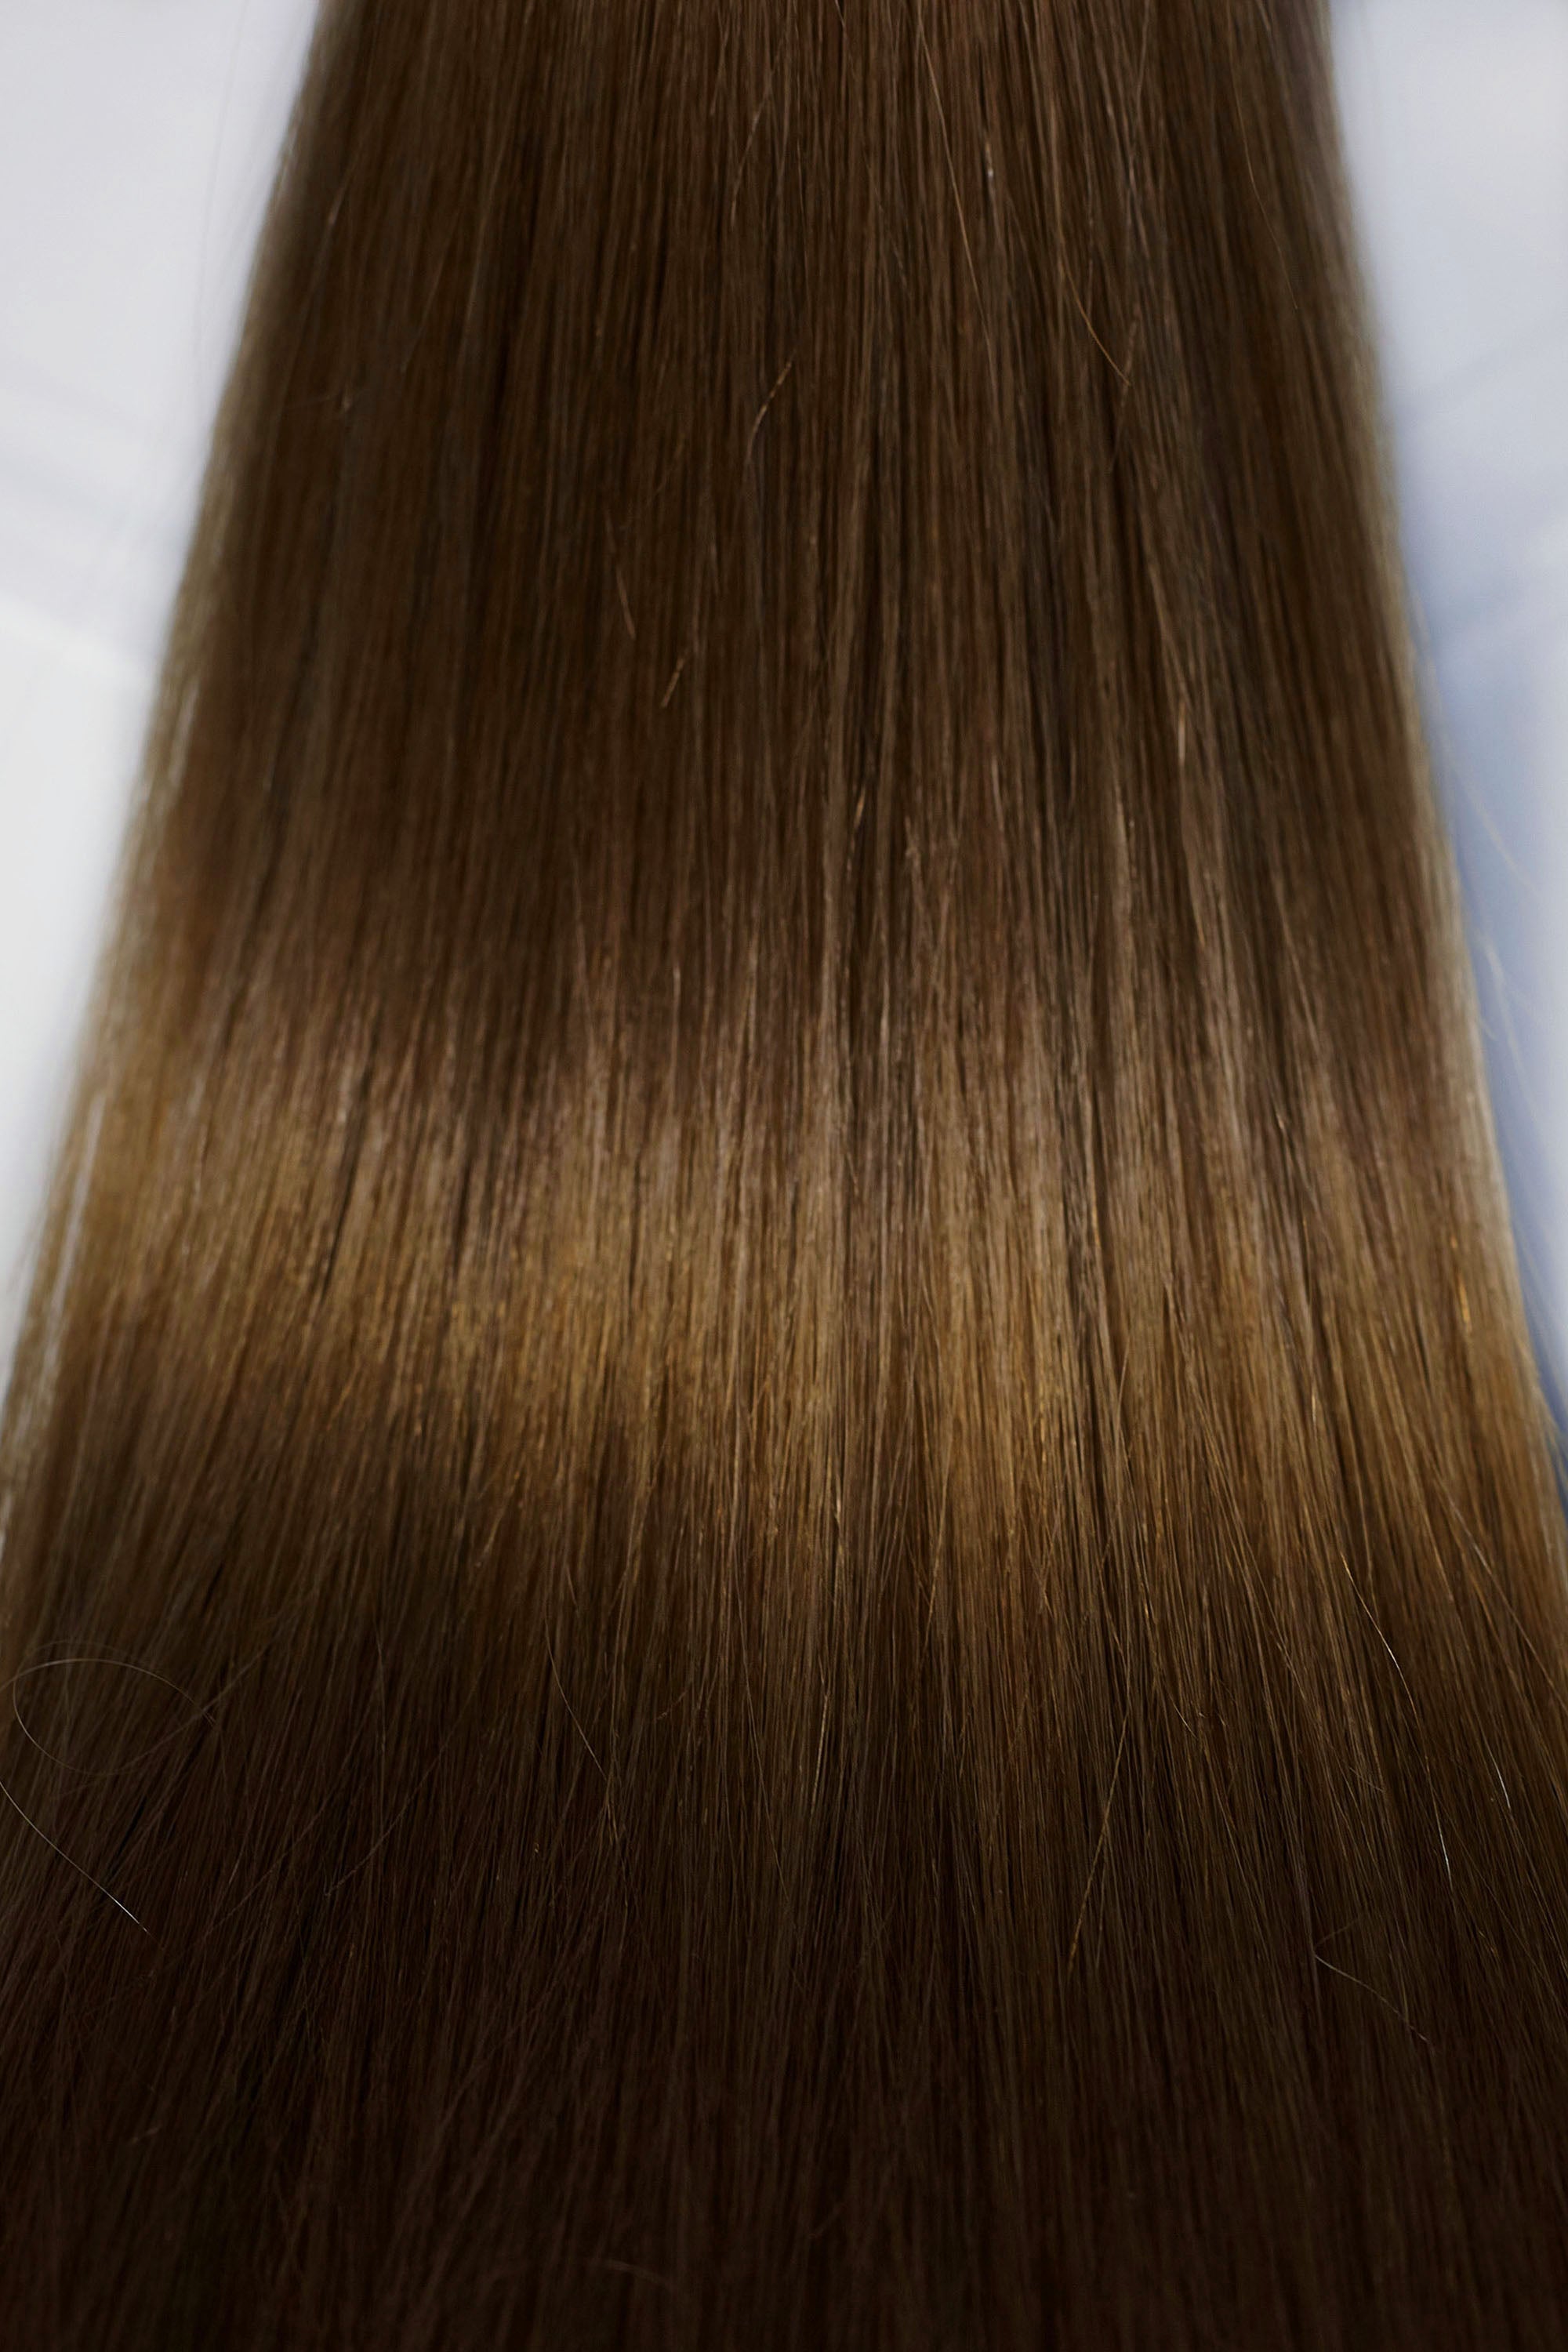 Behair professional Keratin Tip "Premium" 22" (55cm) Natural Straight Honey Walnut Brown #5 - 25g (Micro - 0.5g each pcs) hair extensions